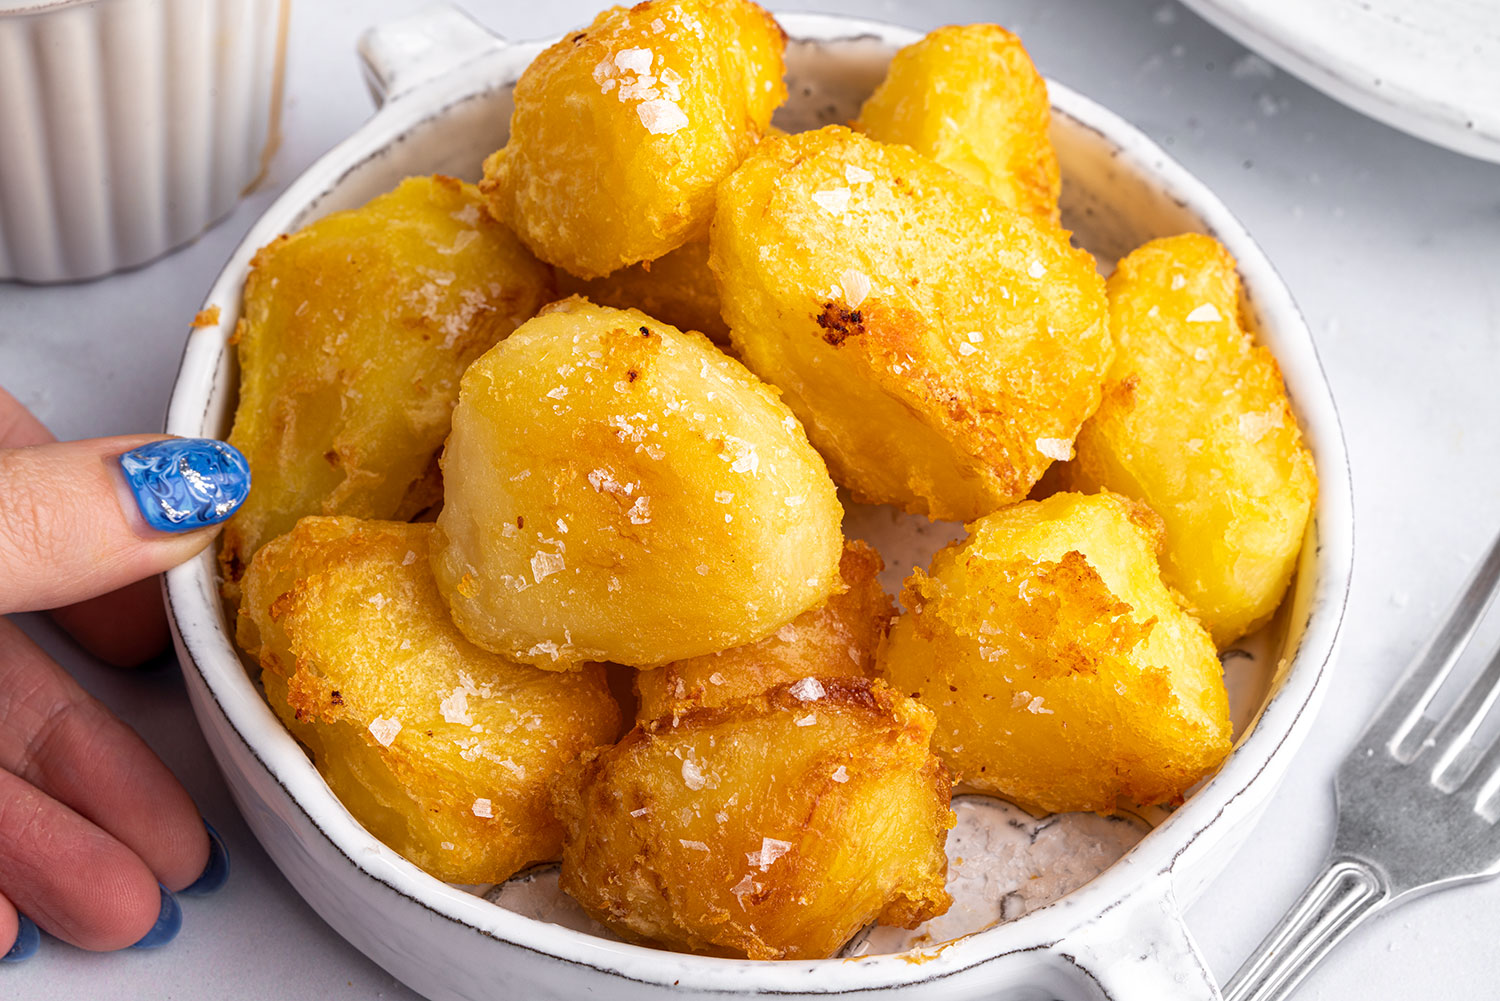 https://glutenfreecuppatea.co.uk/wp-content/uploads/2020/11/gluten-free-roast-potatoes-recipe-featured.jpg